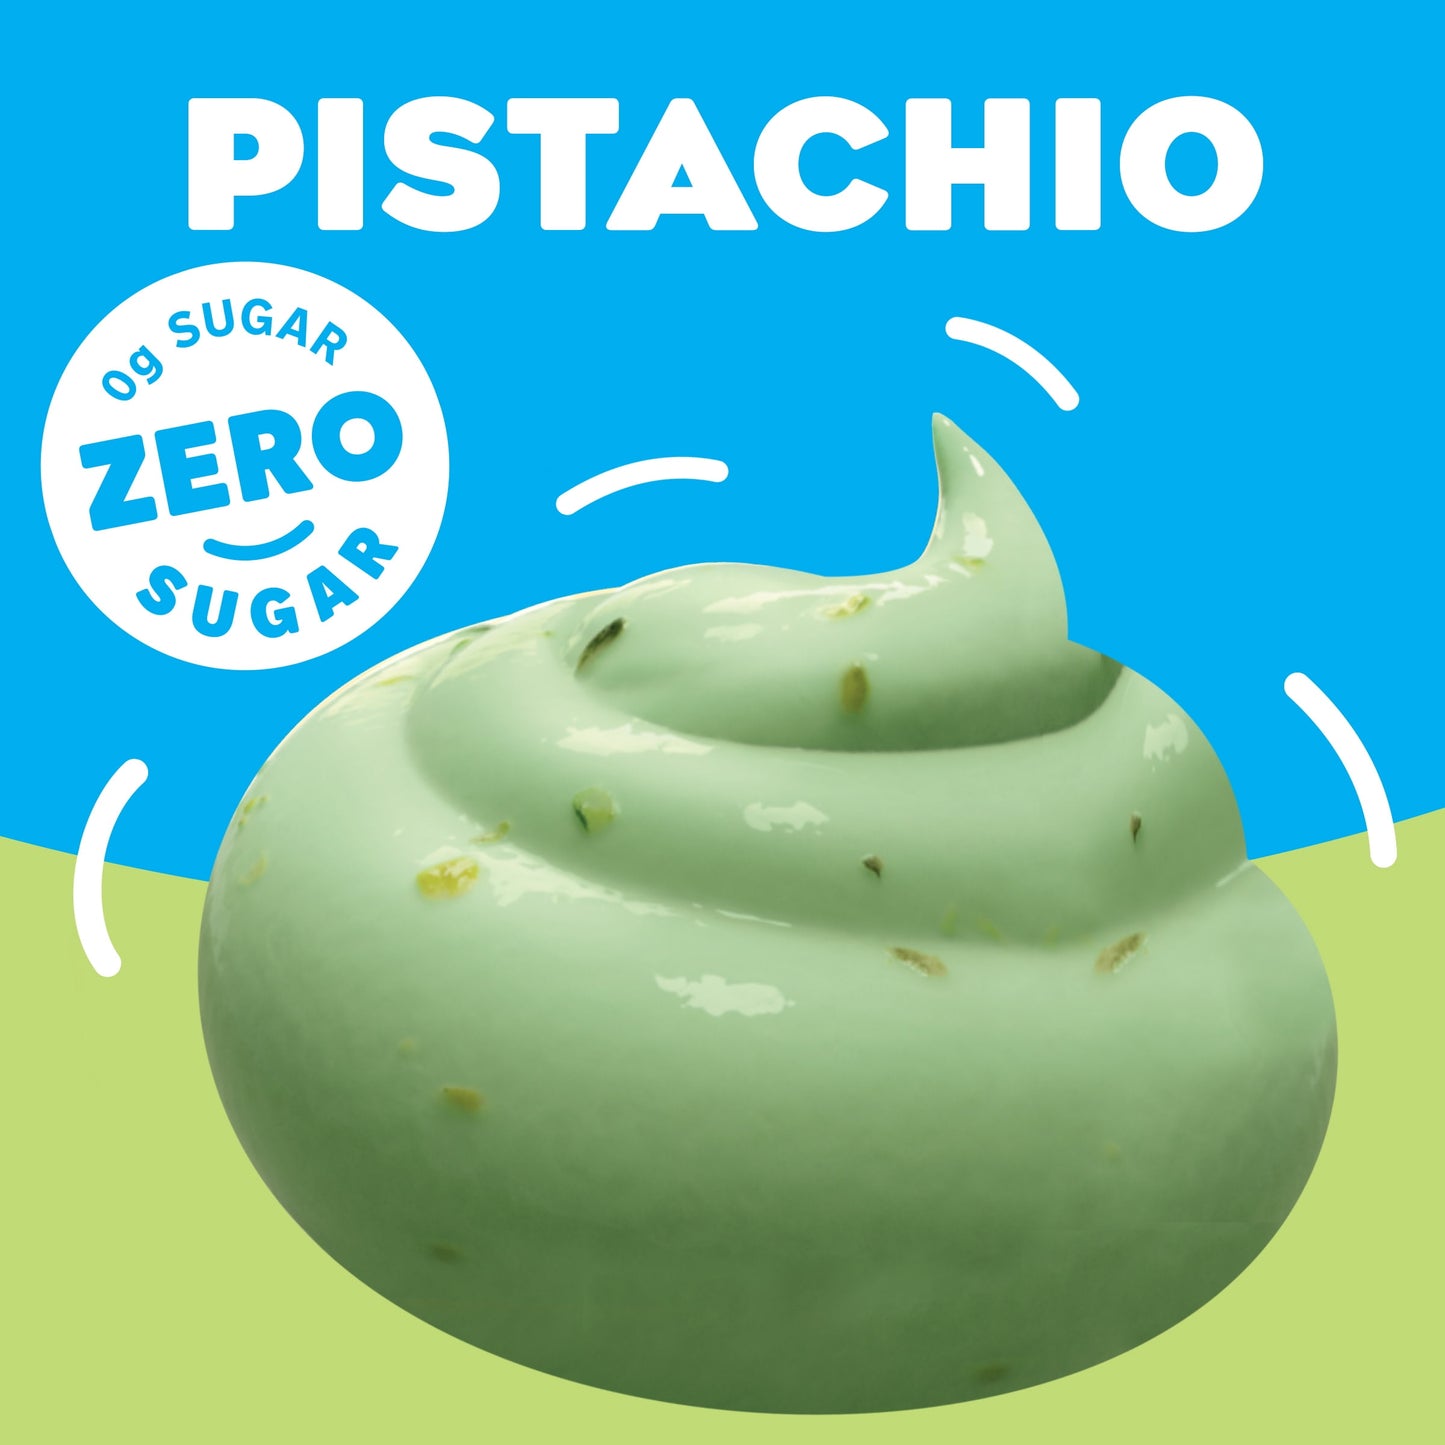 Jell-O Pistachio Artificially Flavored Zero Sugar Instant Reduced Calorie Pudding & Pie Filling Mix, 1 oz Box